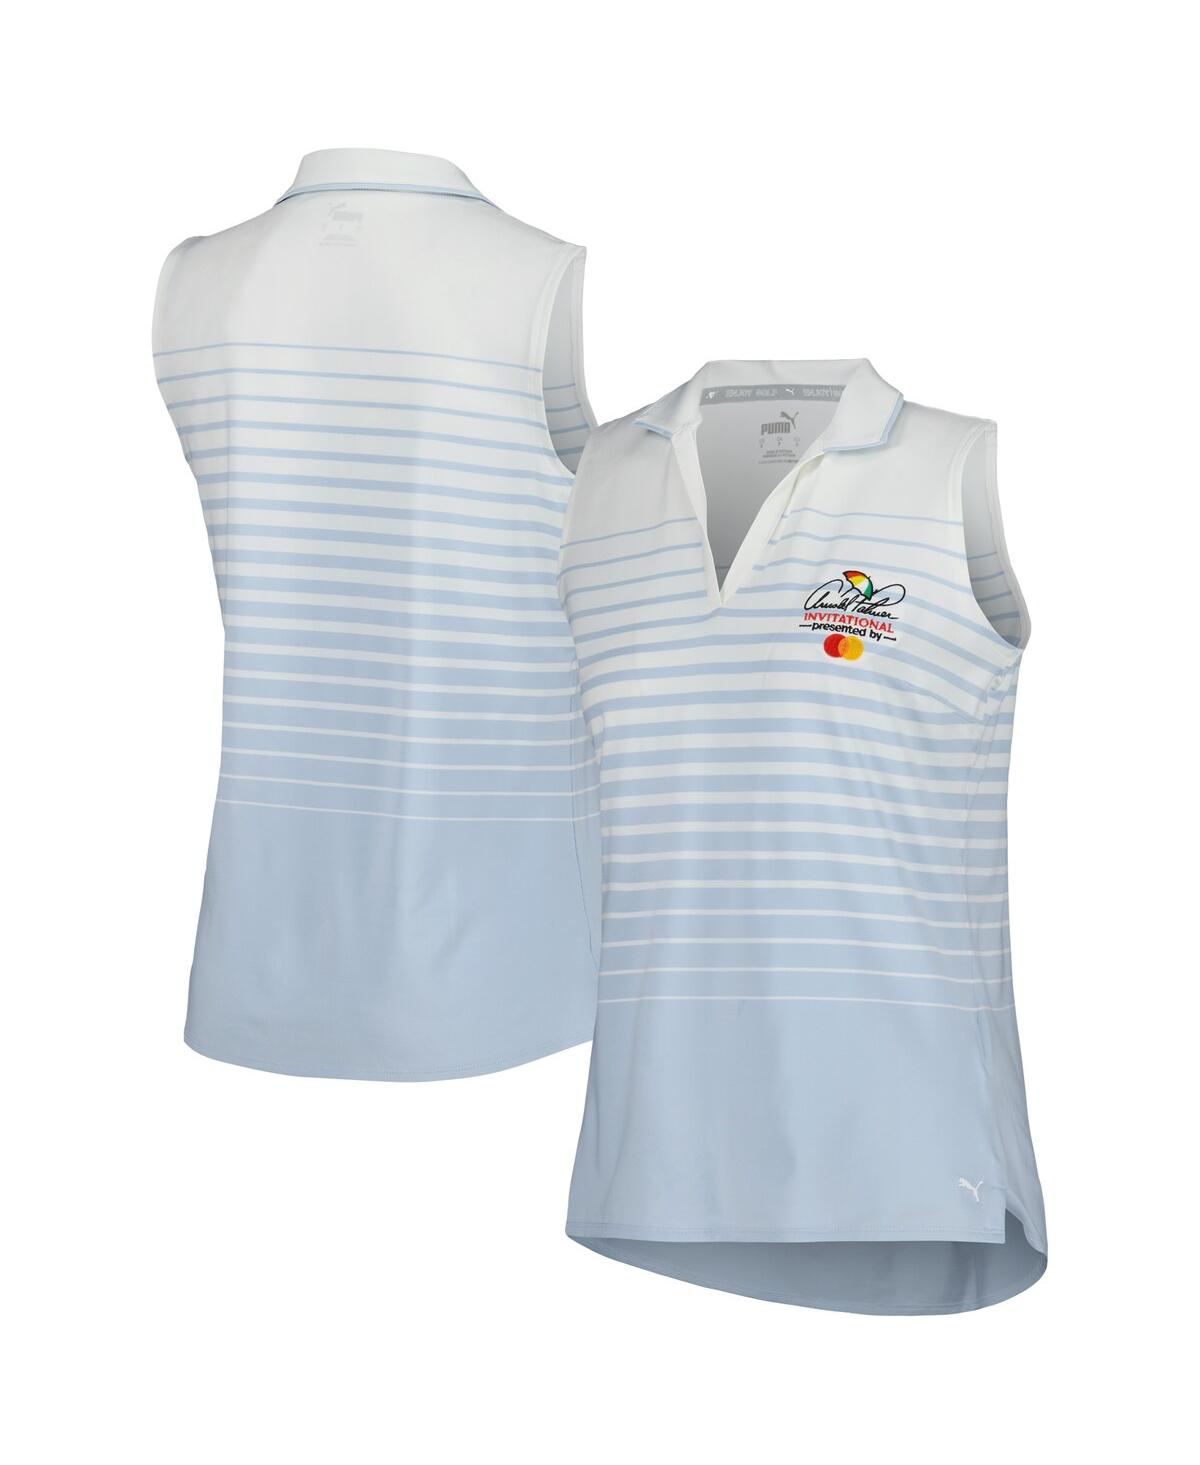 Shop Puma Women's  Light Blue Arnold Palmer Mattr Stripe Sleeveless V-neck Polo Shirt